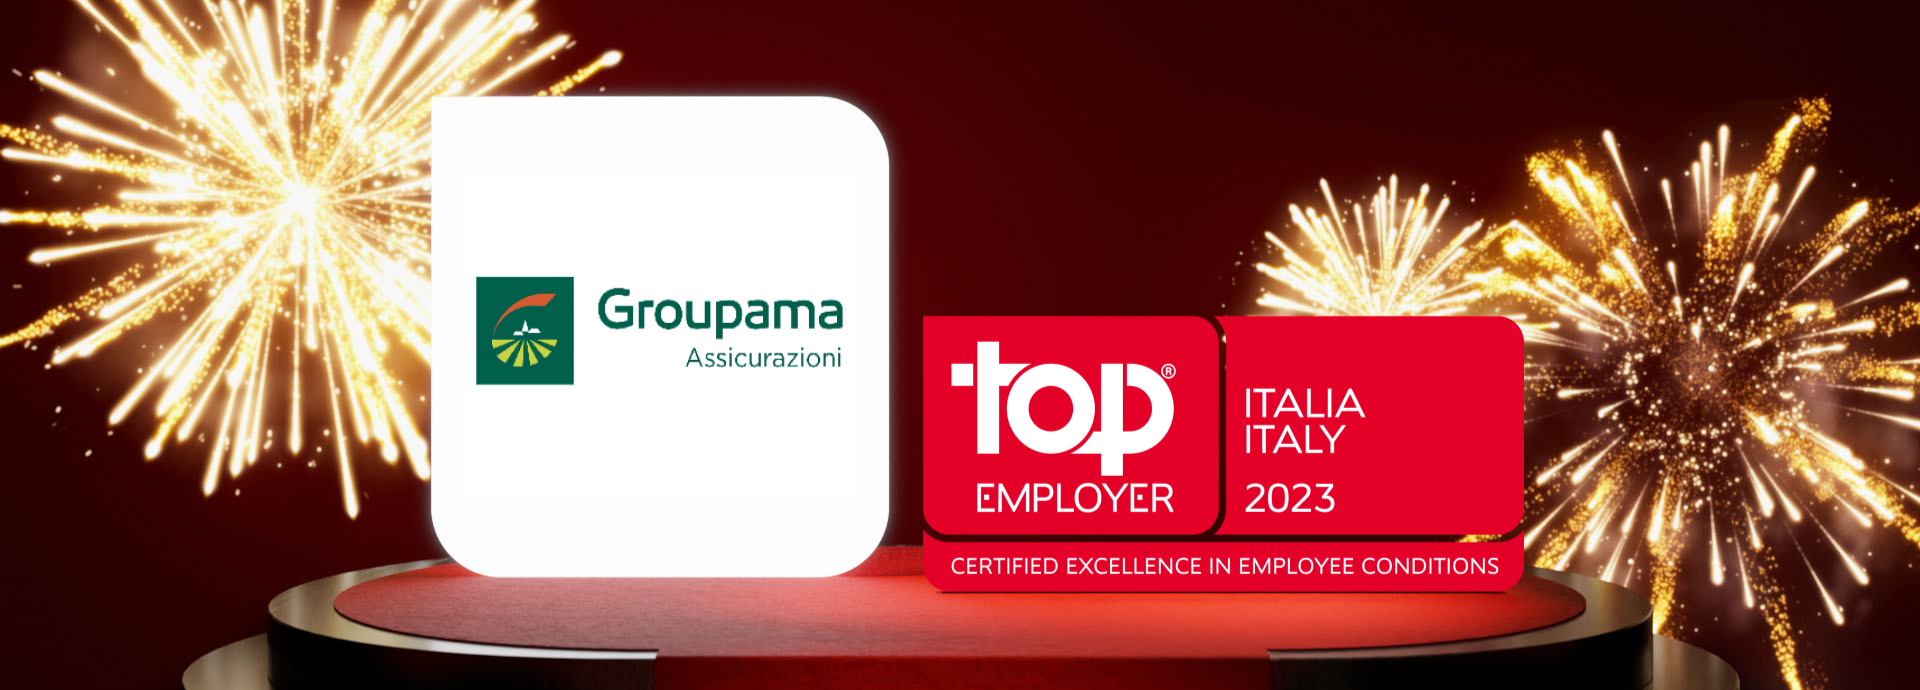 Groupama Assicurazioni Top Employer 2023